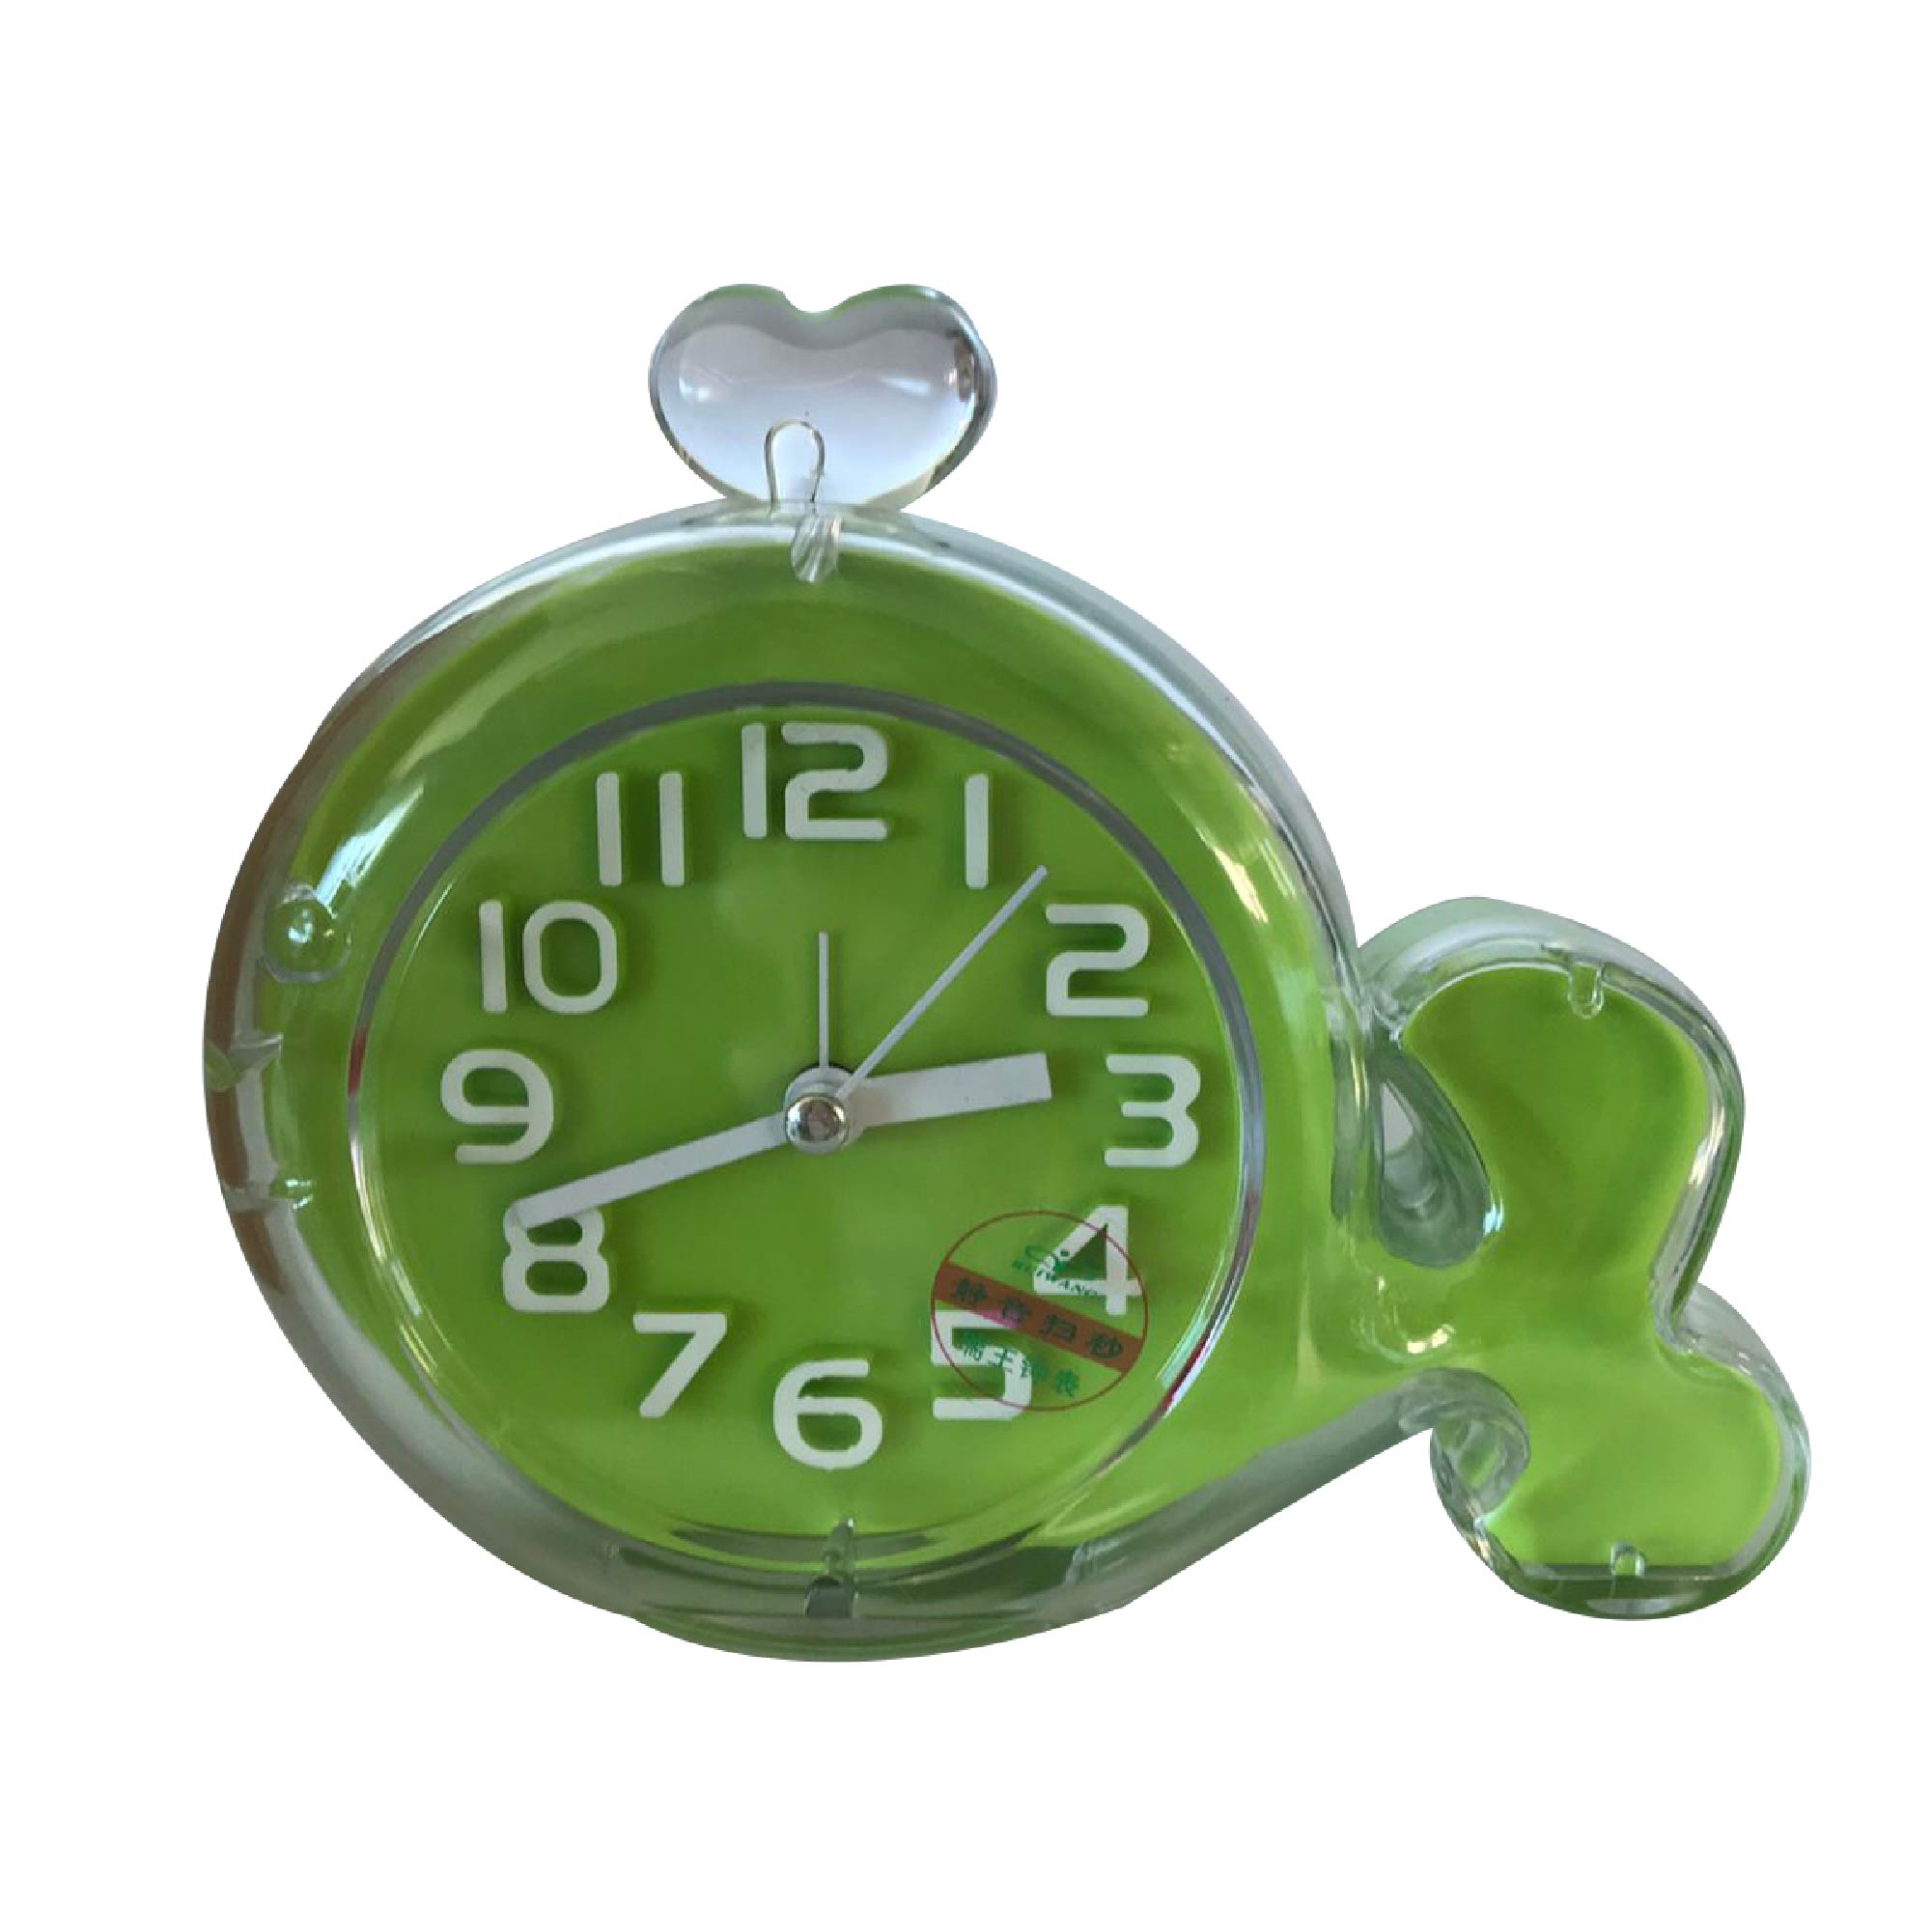 Ruiwang Clock Alarm Clock Green, NO881G